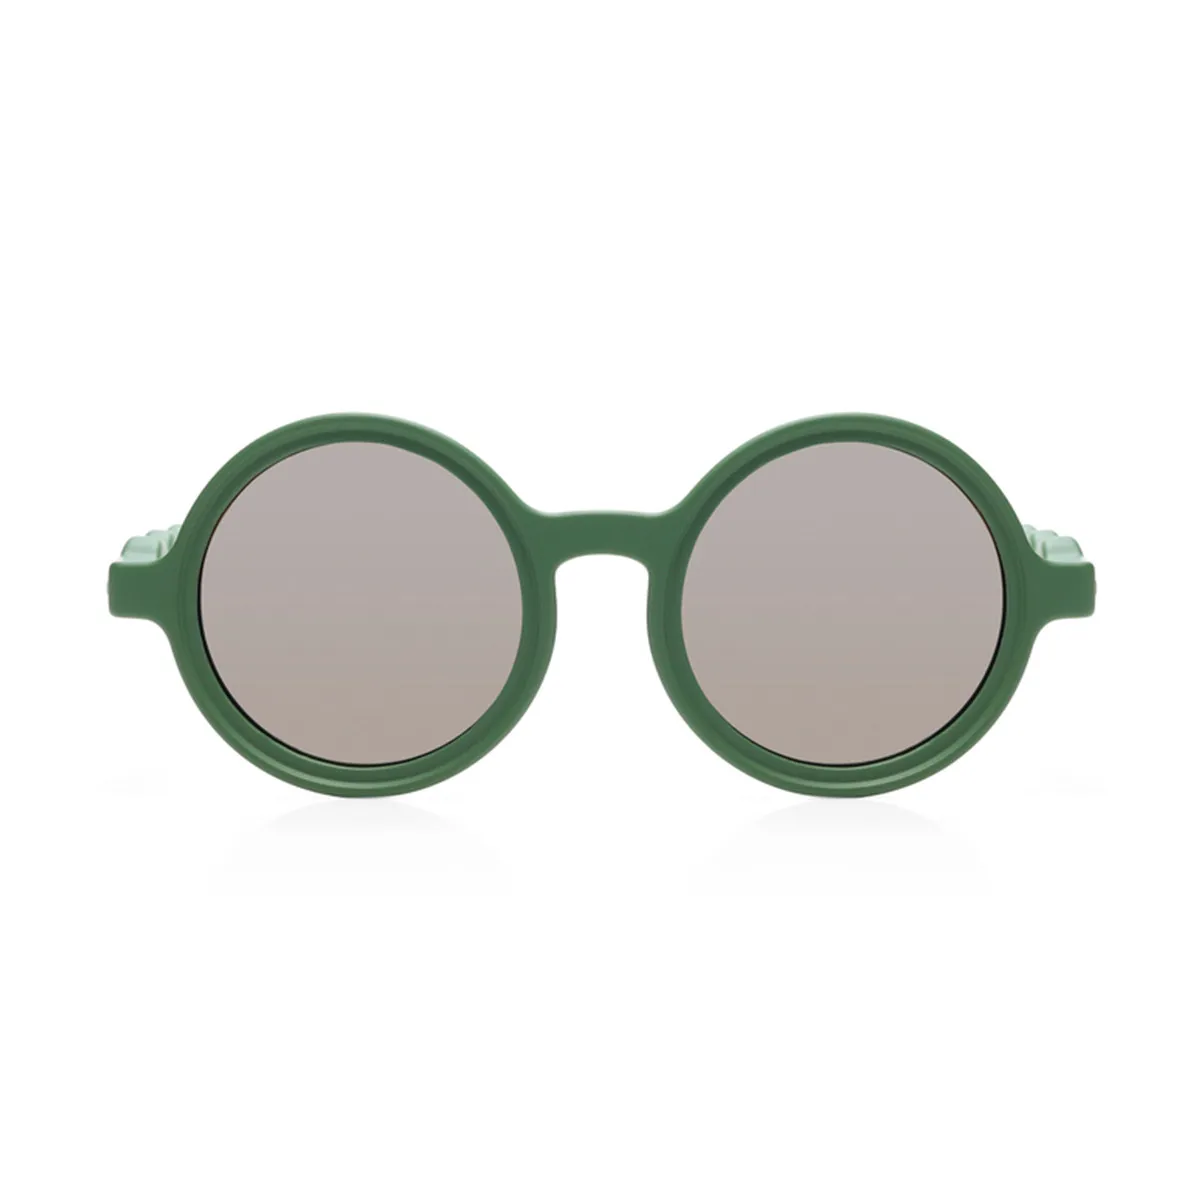 Olivio&Co naočare Terracotta Polarized, 0-3g